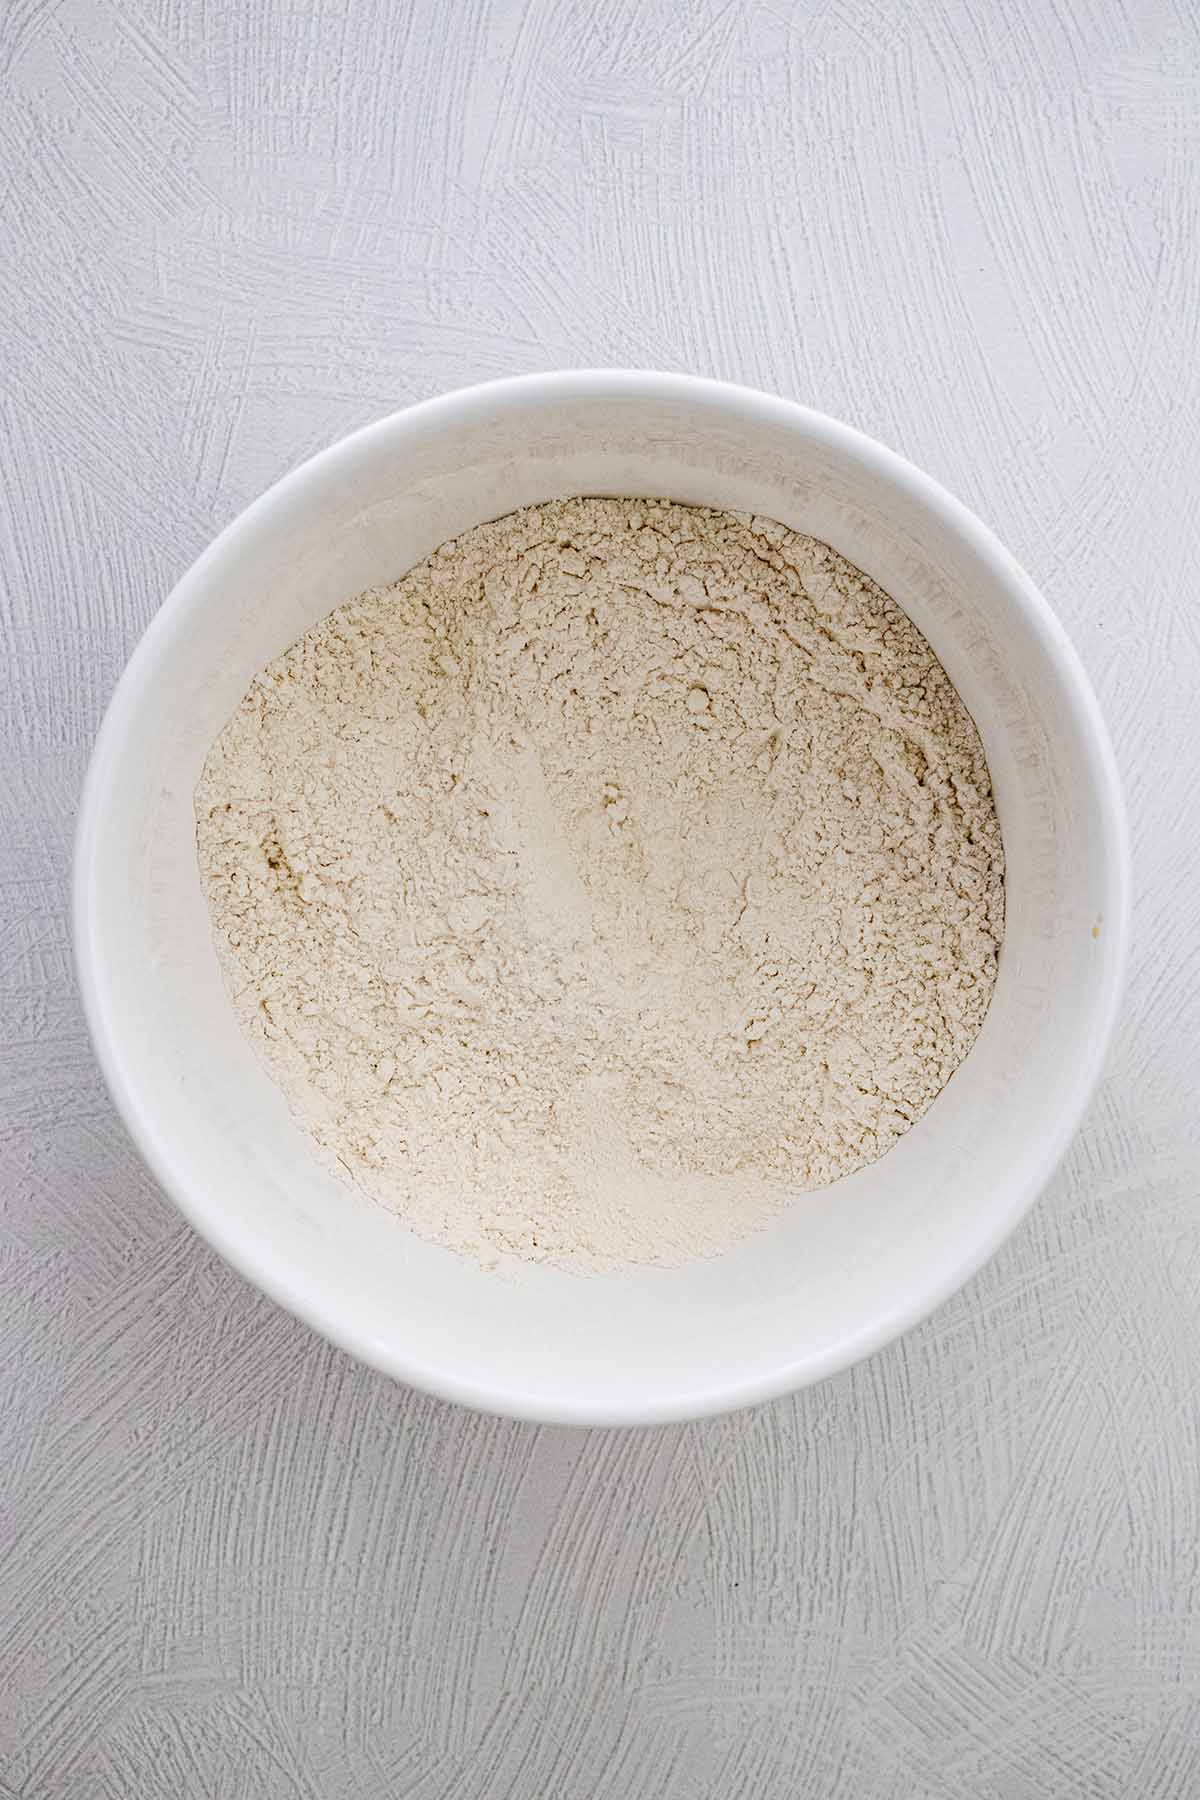 Dry ingredients in a white ceramic bowl.